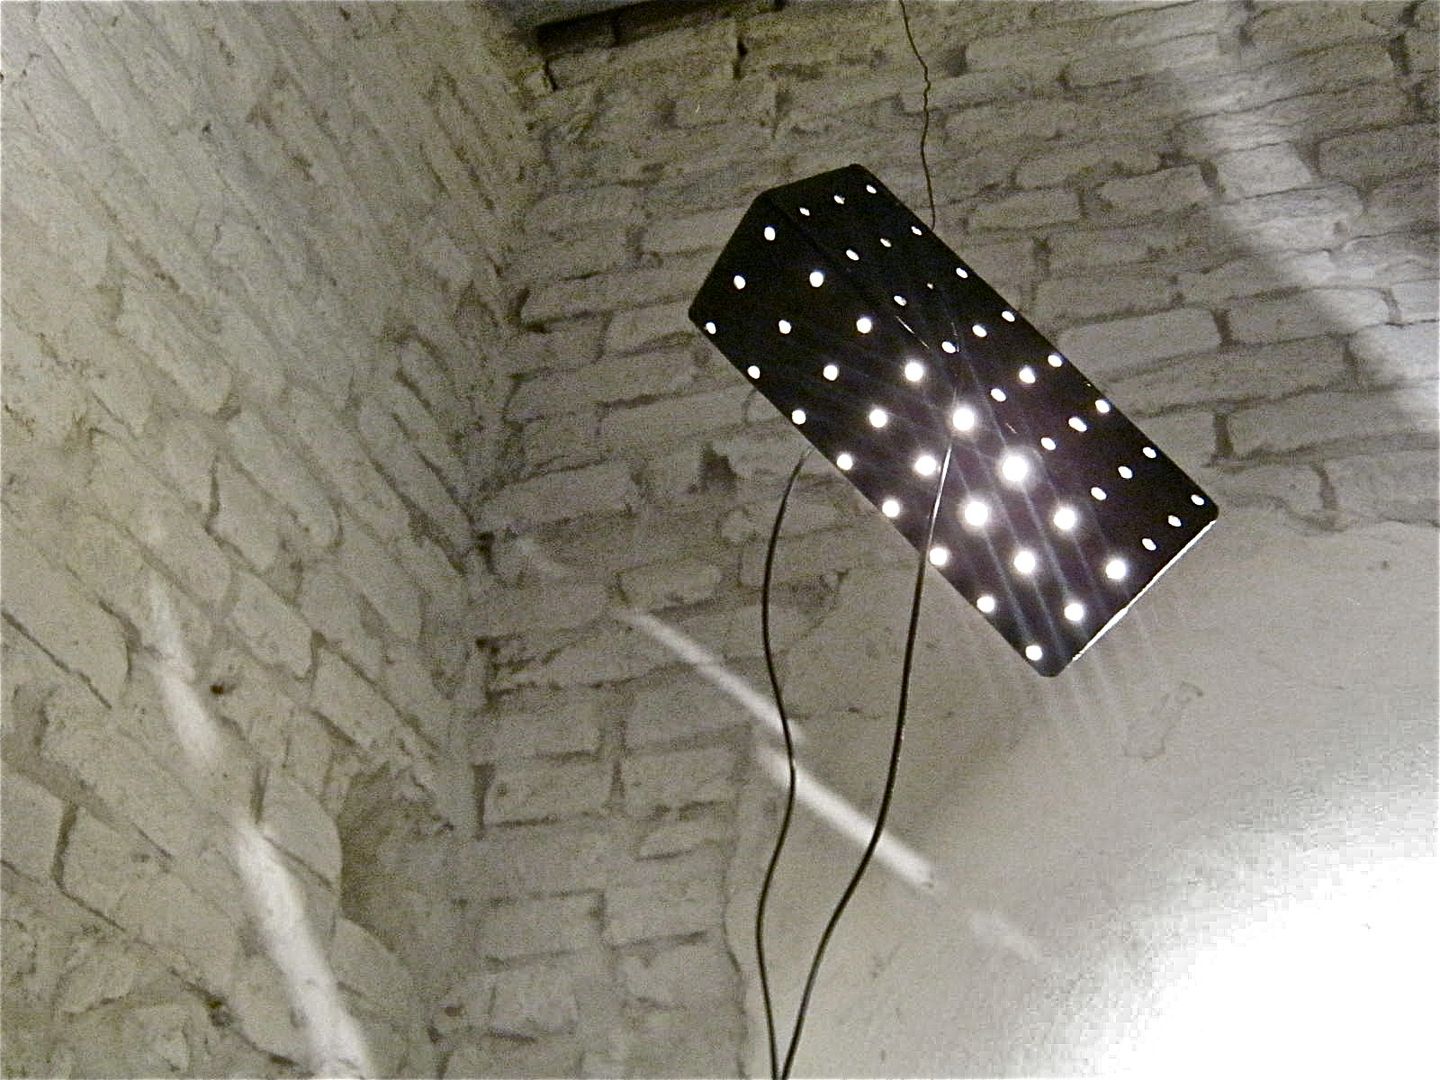 bukubo lamp, pda progetti d'arredo pda progetti d'arredo Industrial style kitchen Small appliances